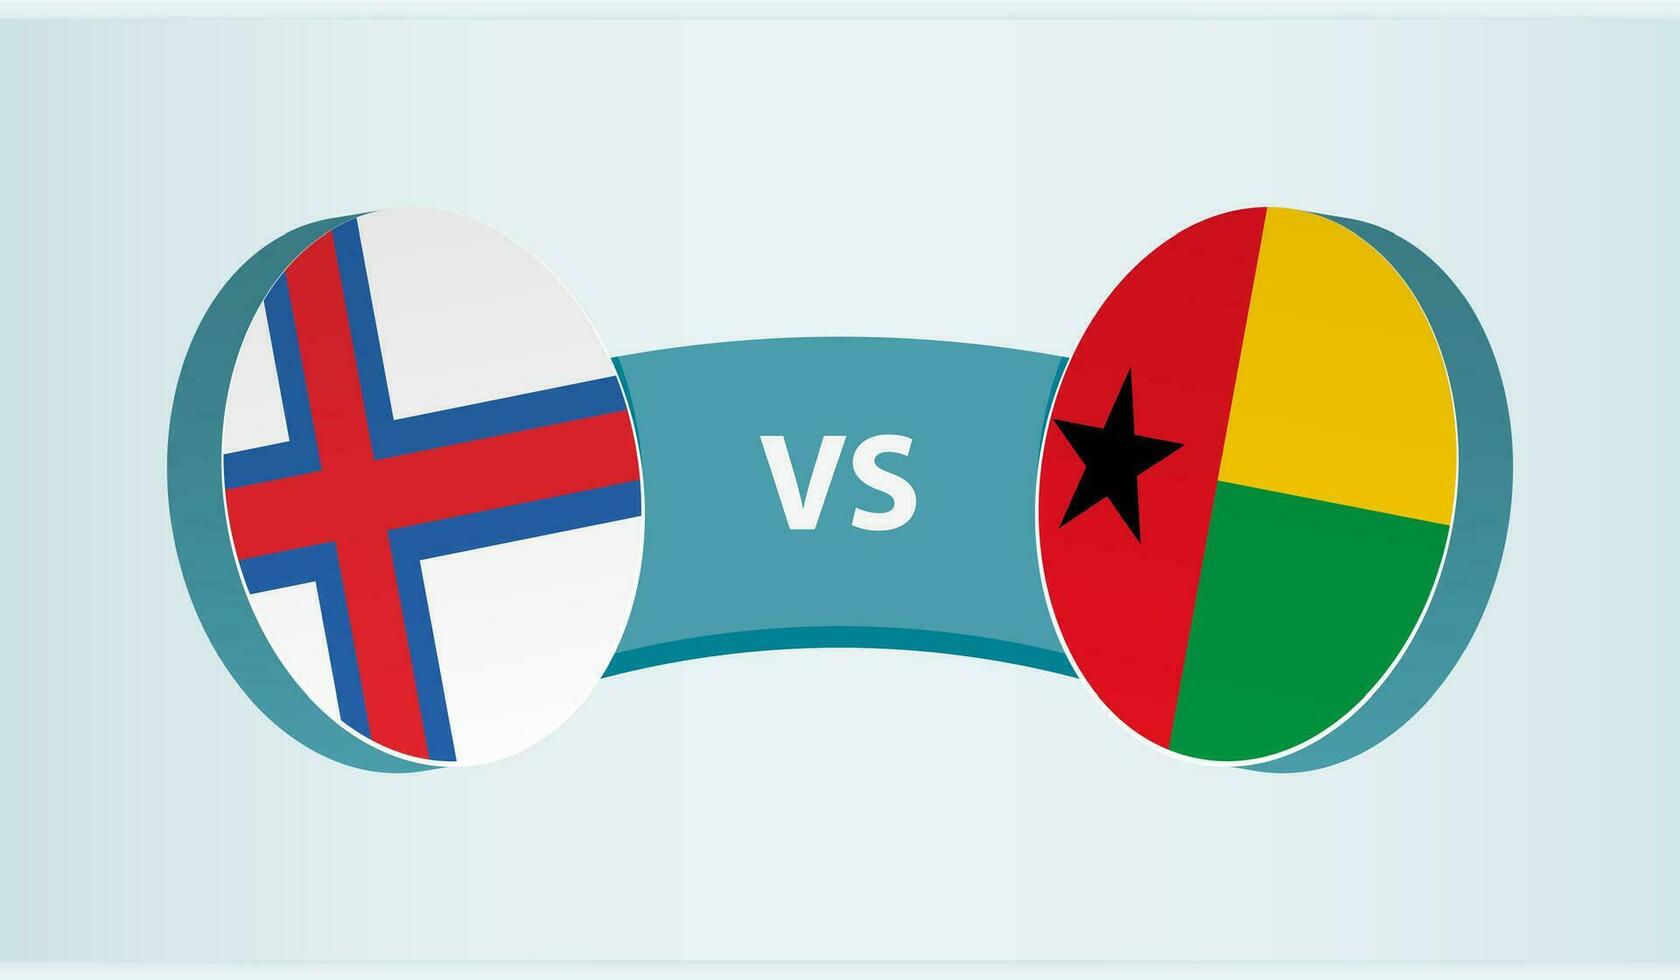 faroe öar mot Guinea-bissau, team sporter konkurrens begrepp. vektor